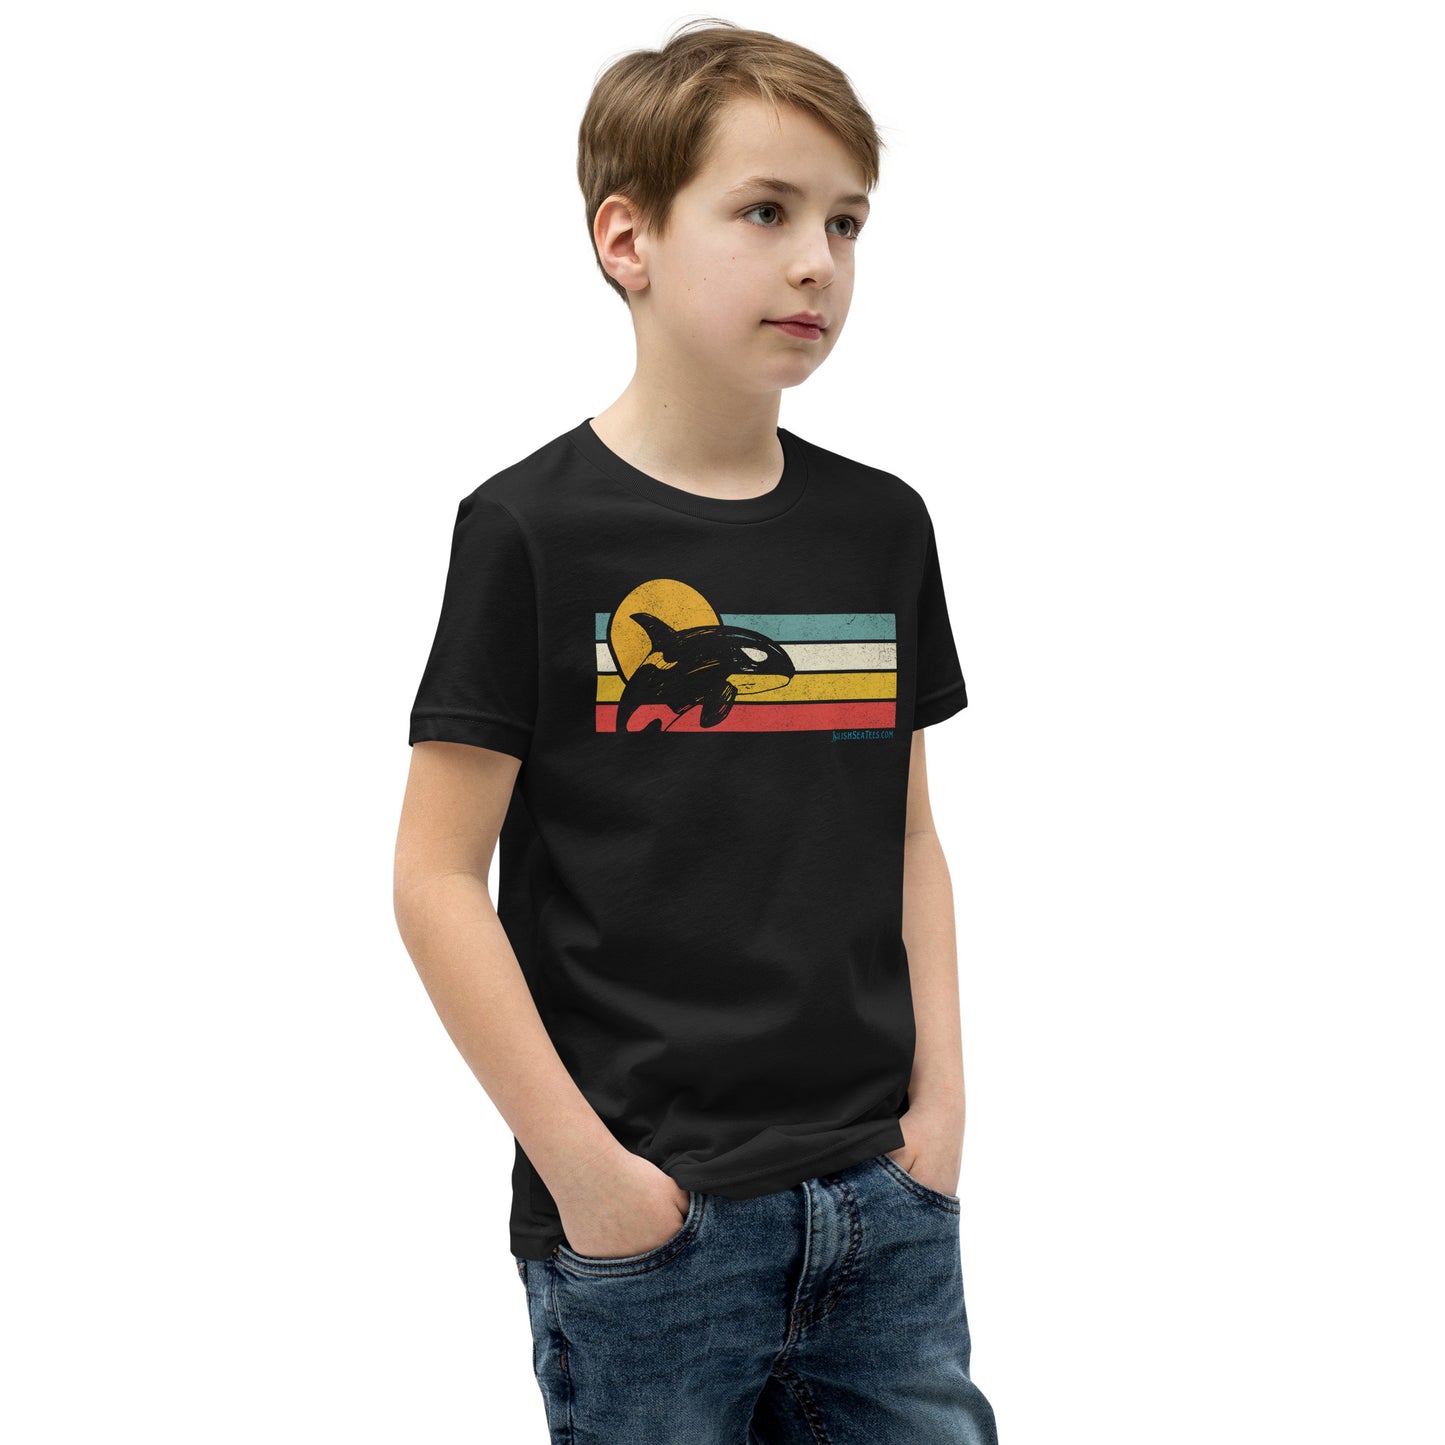 Youth / Teen - "Breaching Orca" - Short Sleeve T-Shirt